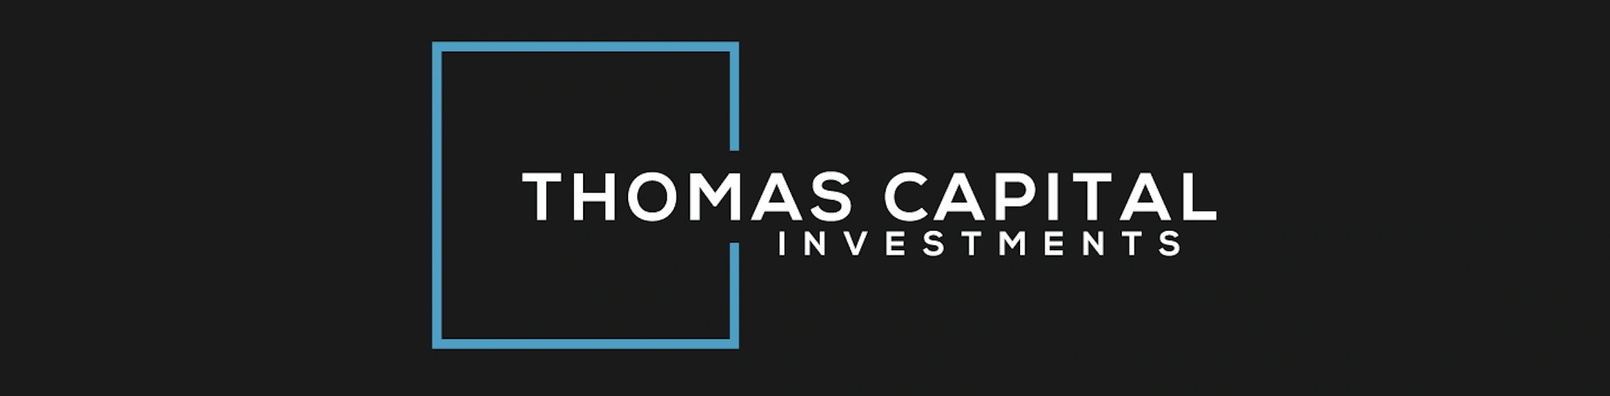 Thomas Capital Investments